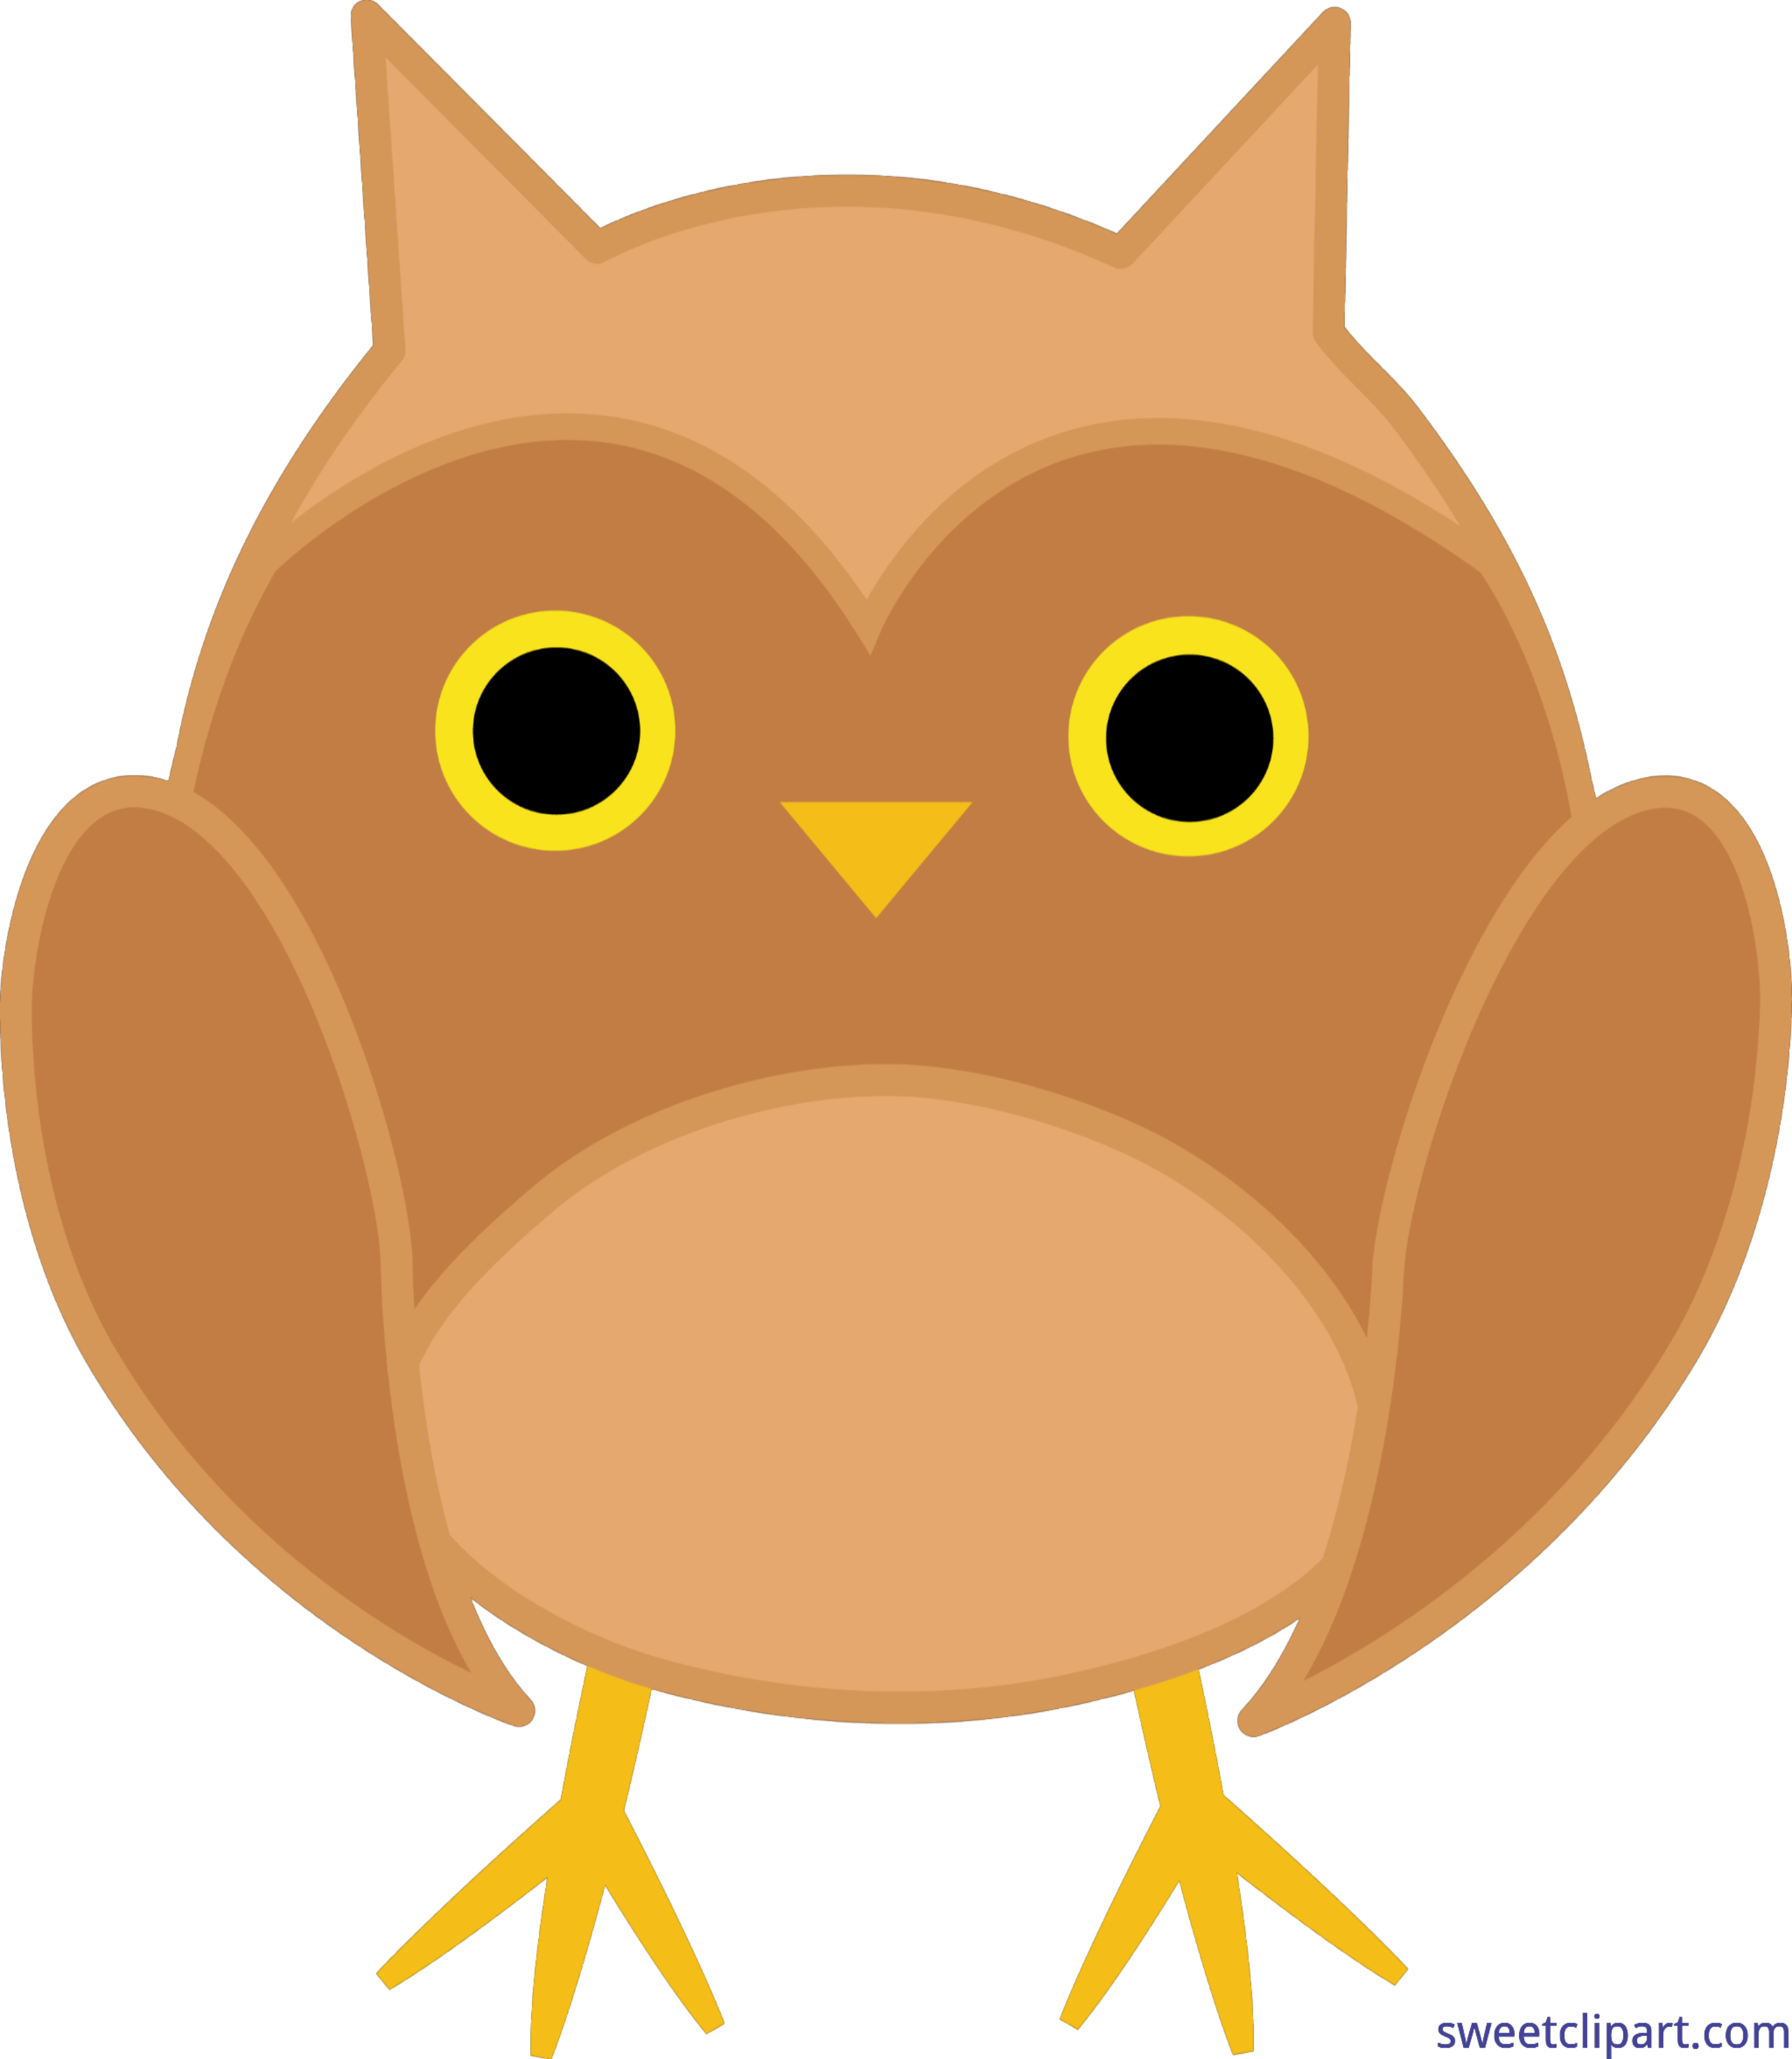 Email clipart design cute. Owl brown clip art